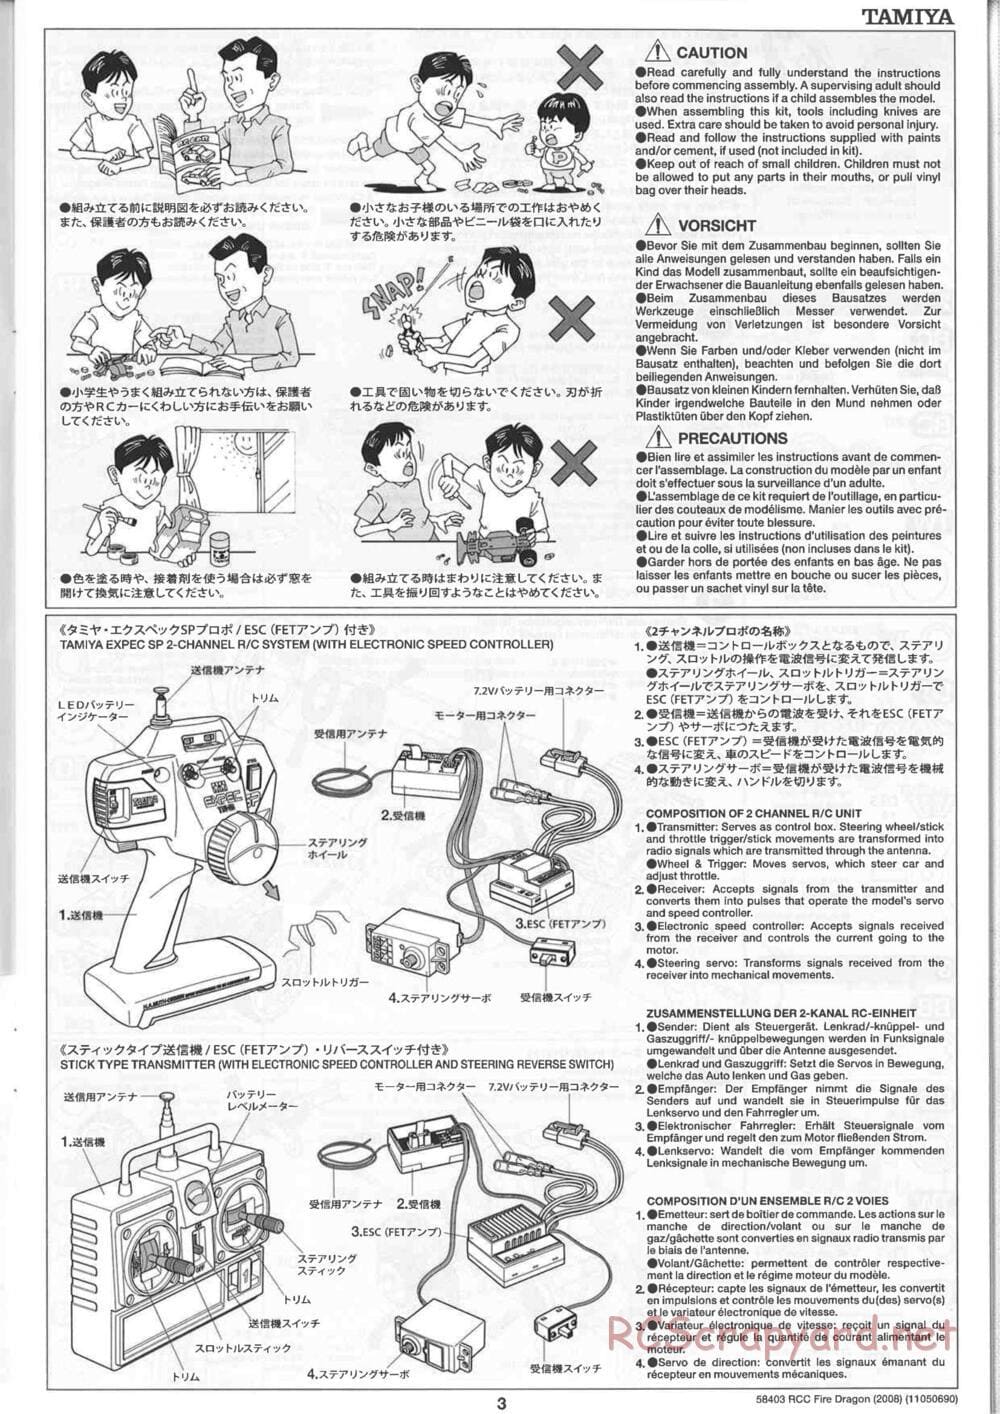 Tamiya - Fire Dragon 2008 - TS2 Chassis - Manual - Page 3